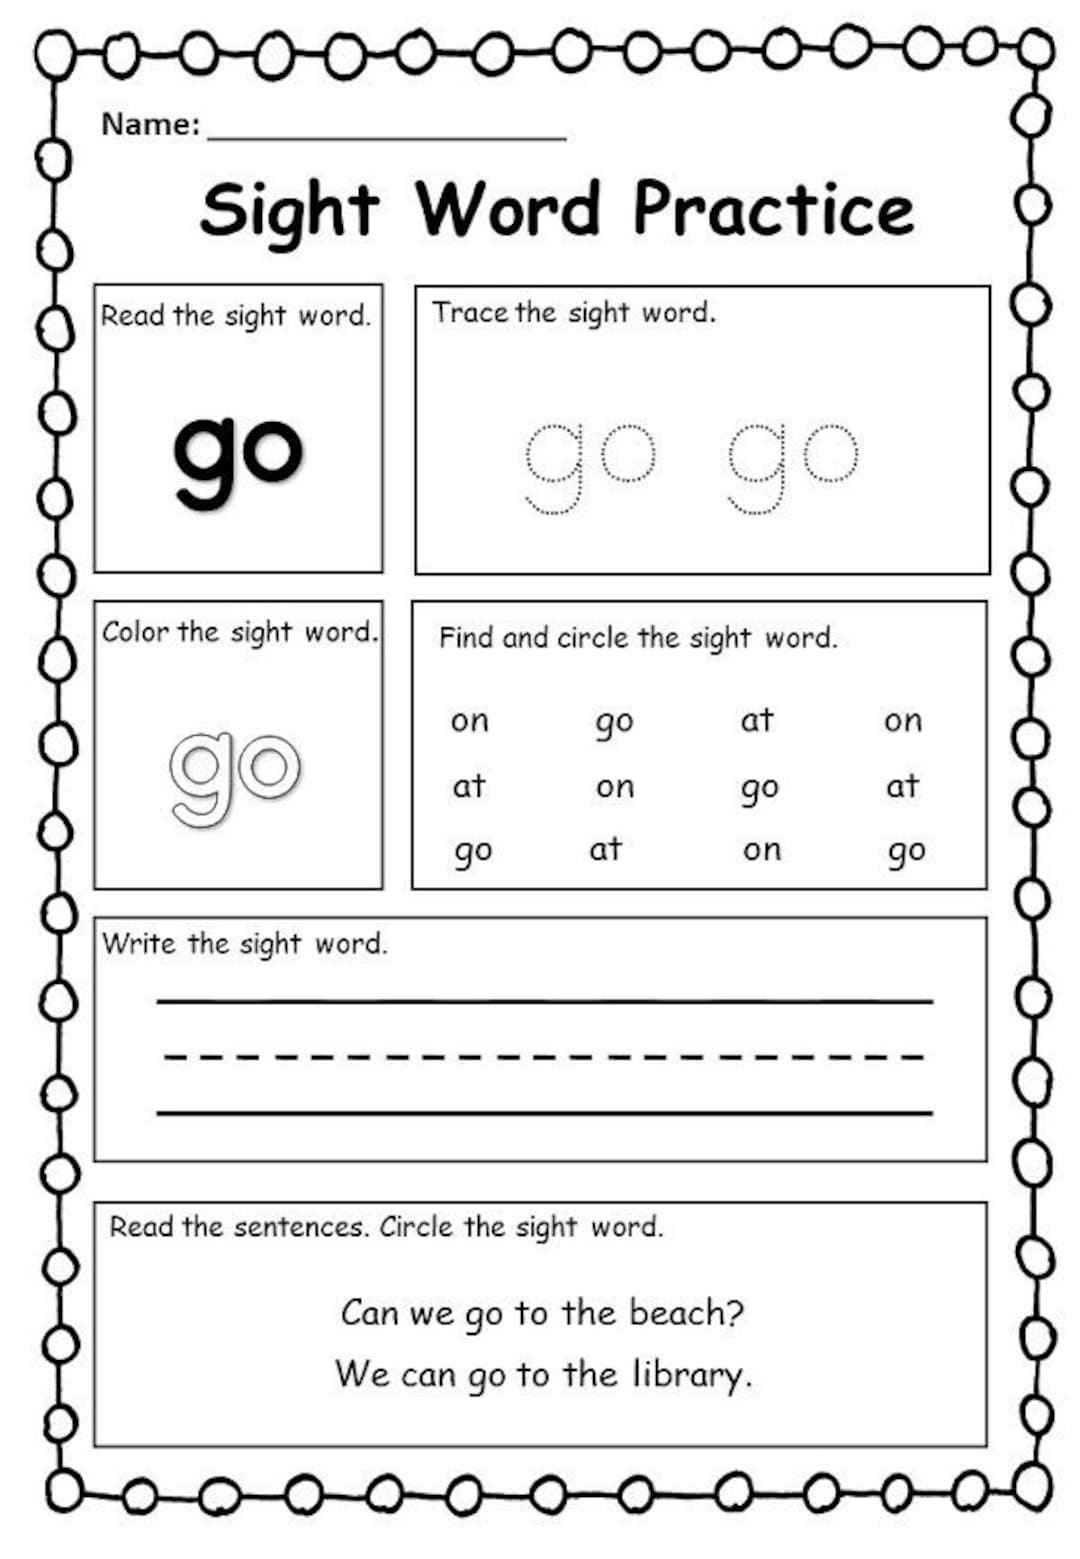 100 Sight Words Worksheets | WorksheetsGO